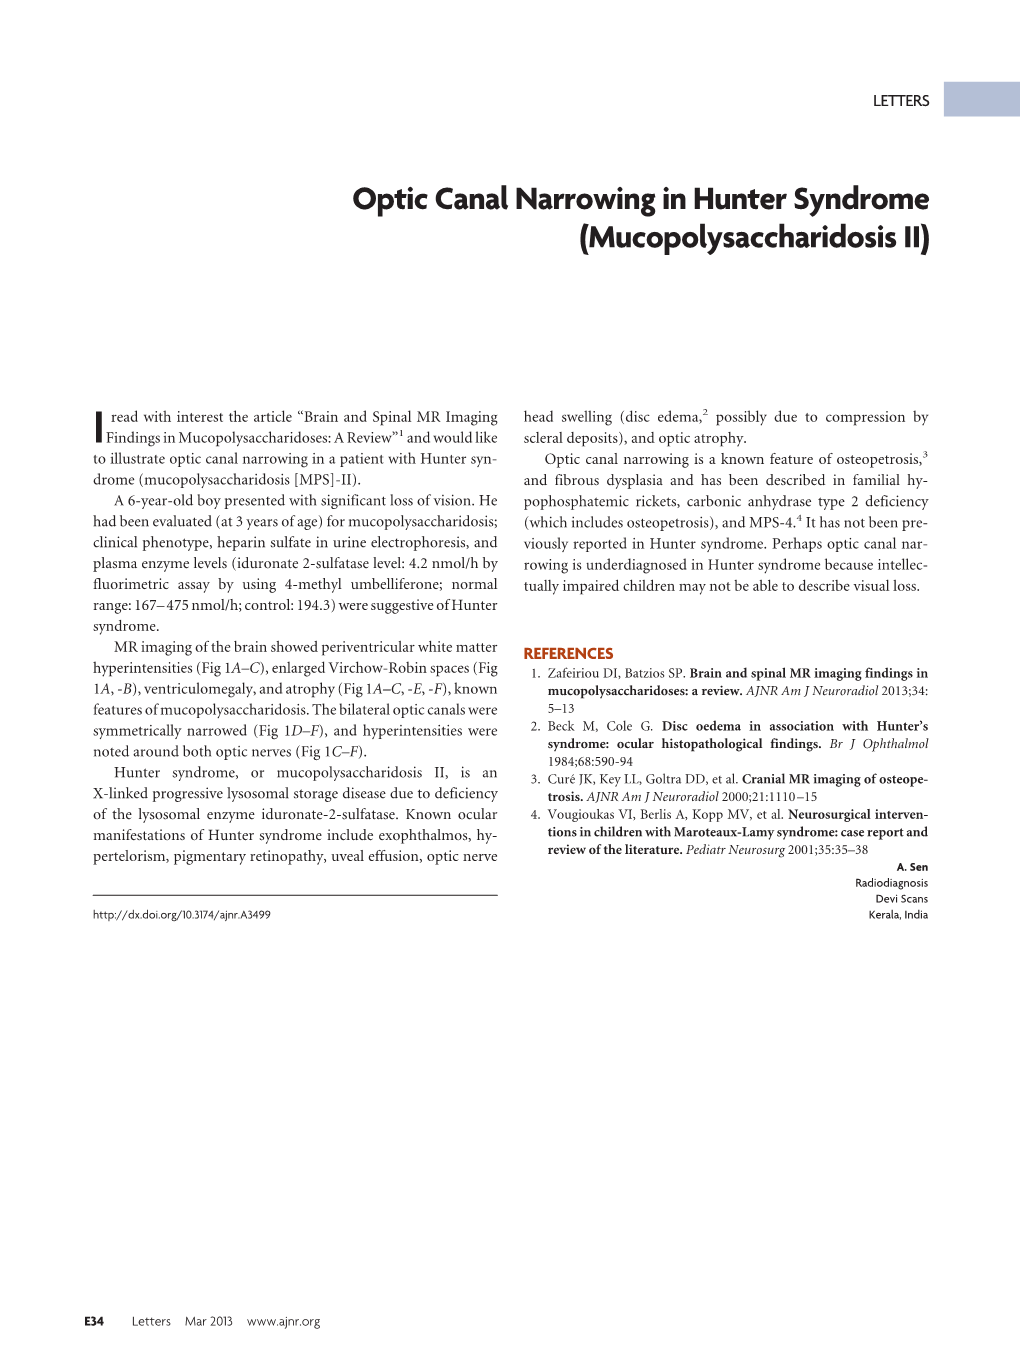 Optic Canal Narrowing in Hunter Syndrome (Mucopolysaccharidosis II)